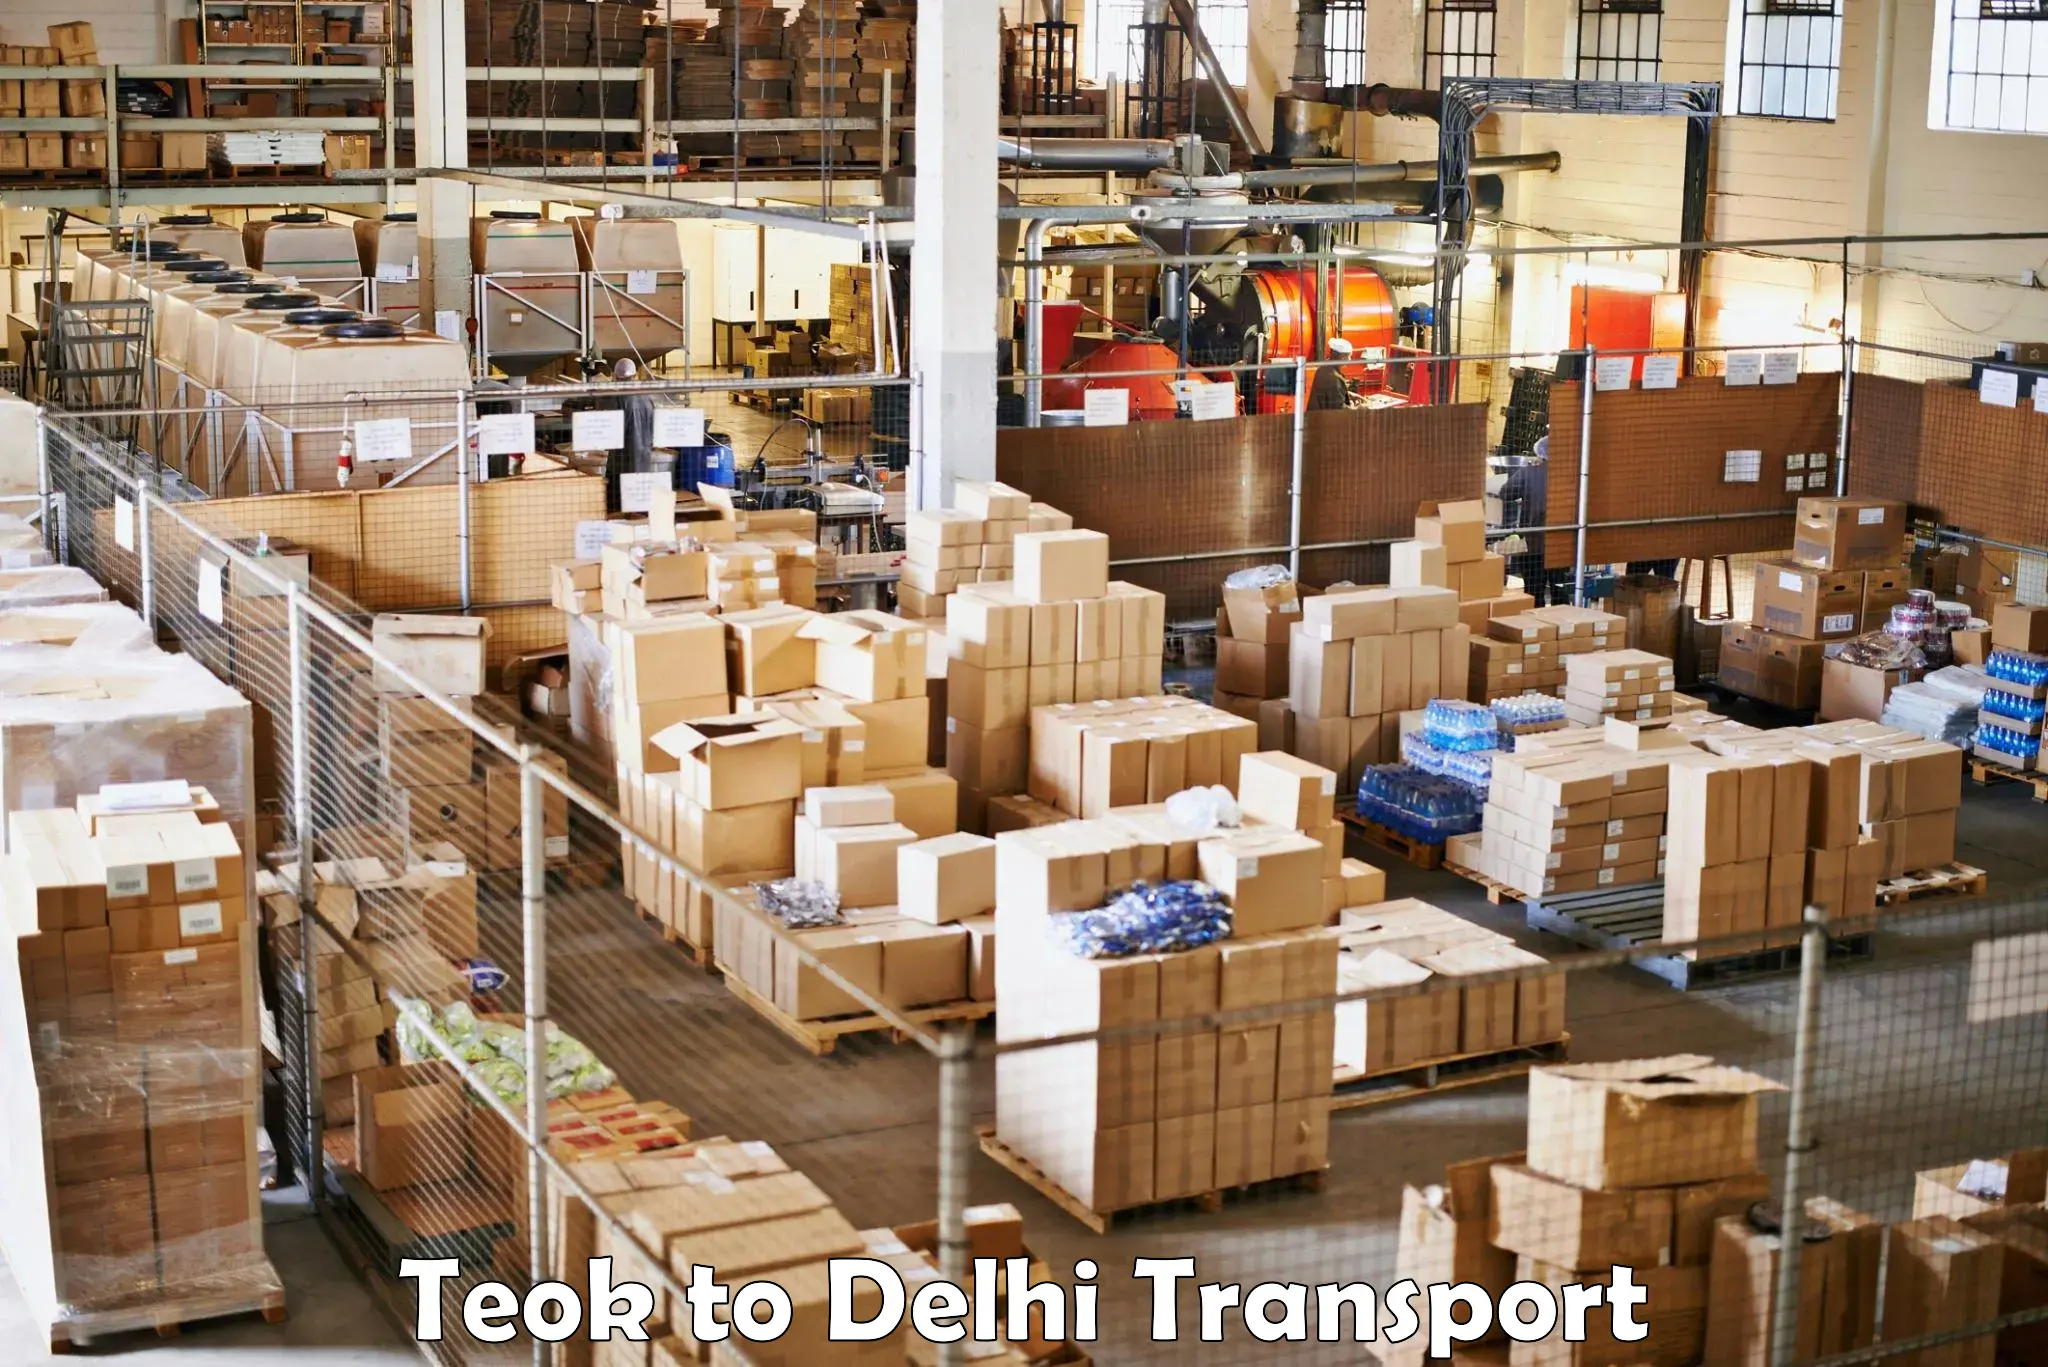 Cycle transportation service Teok to Delhi